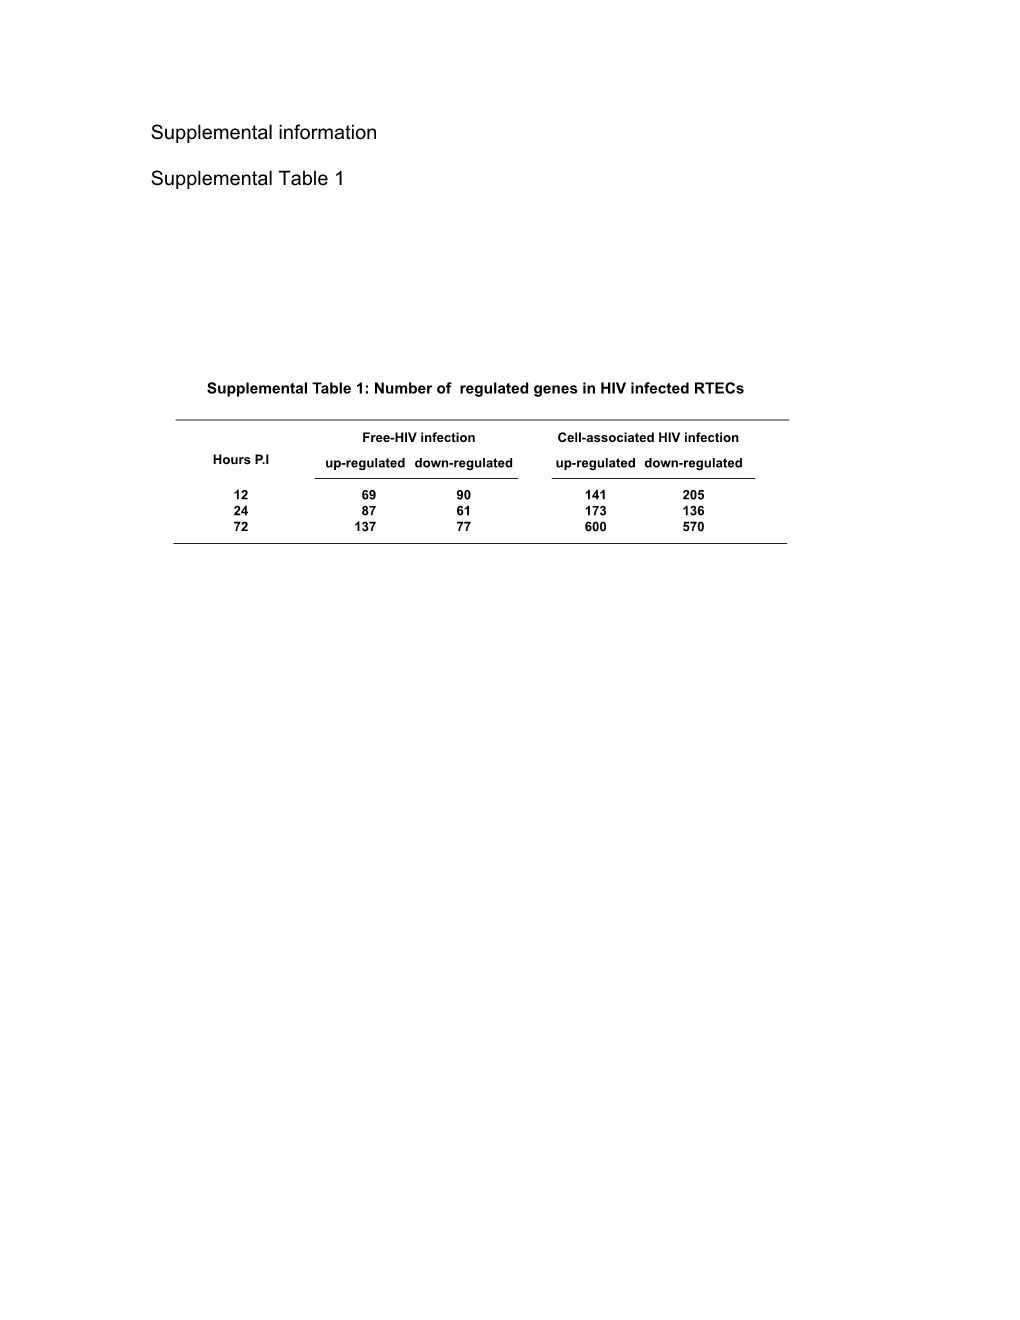 Supplemental Information Supplemental Table 1